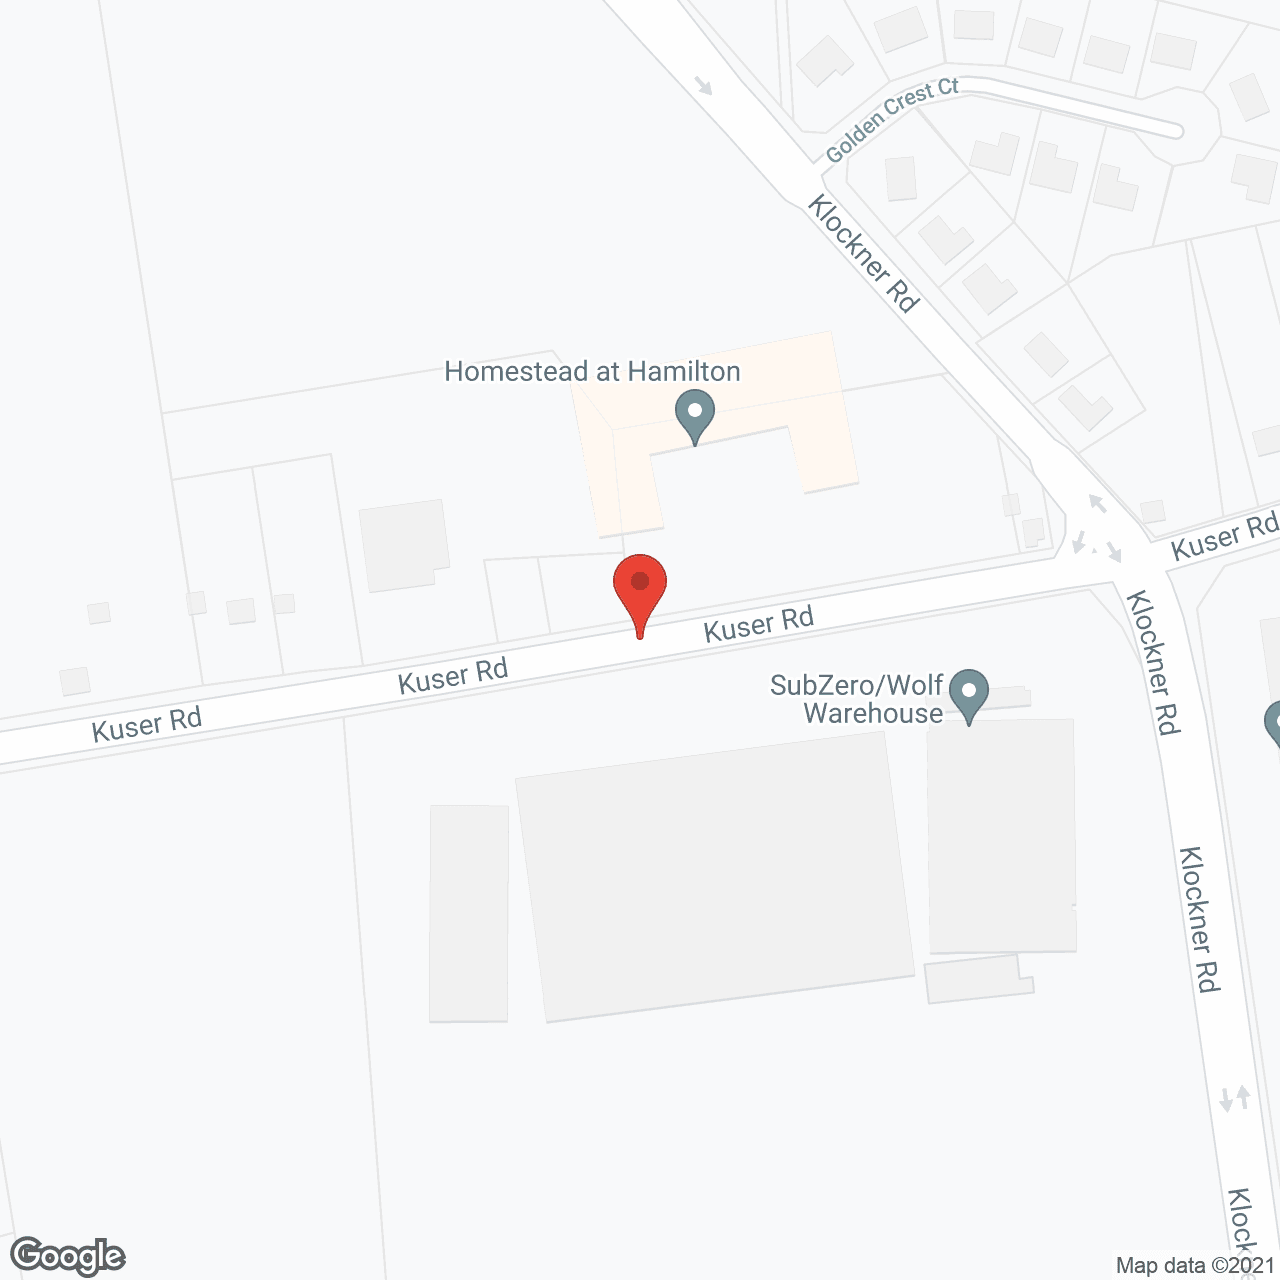 Homestead at Hamilton in google map